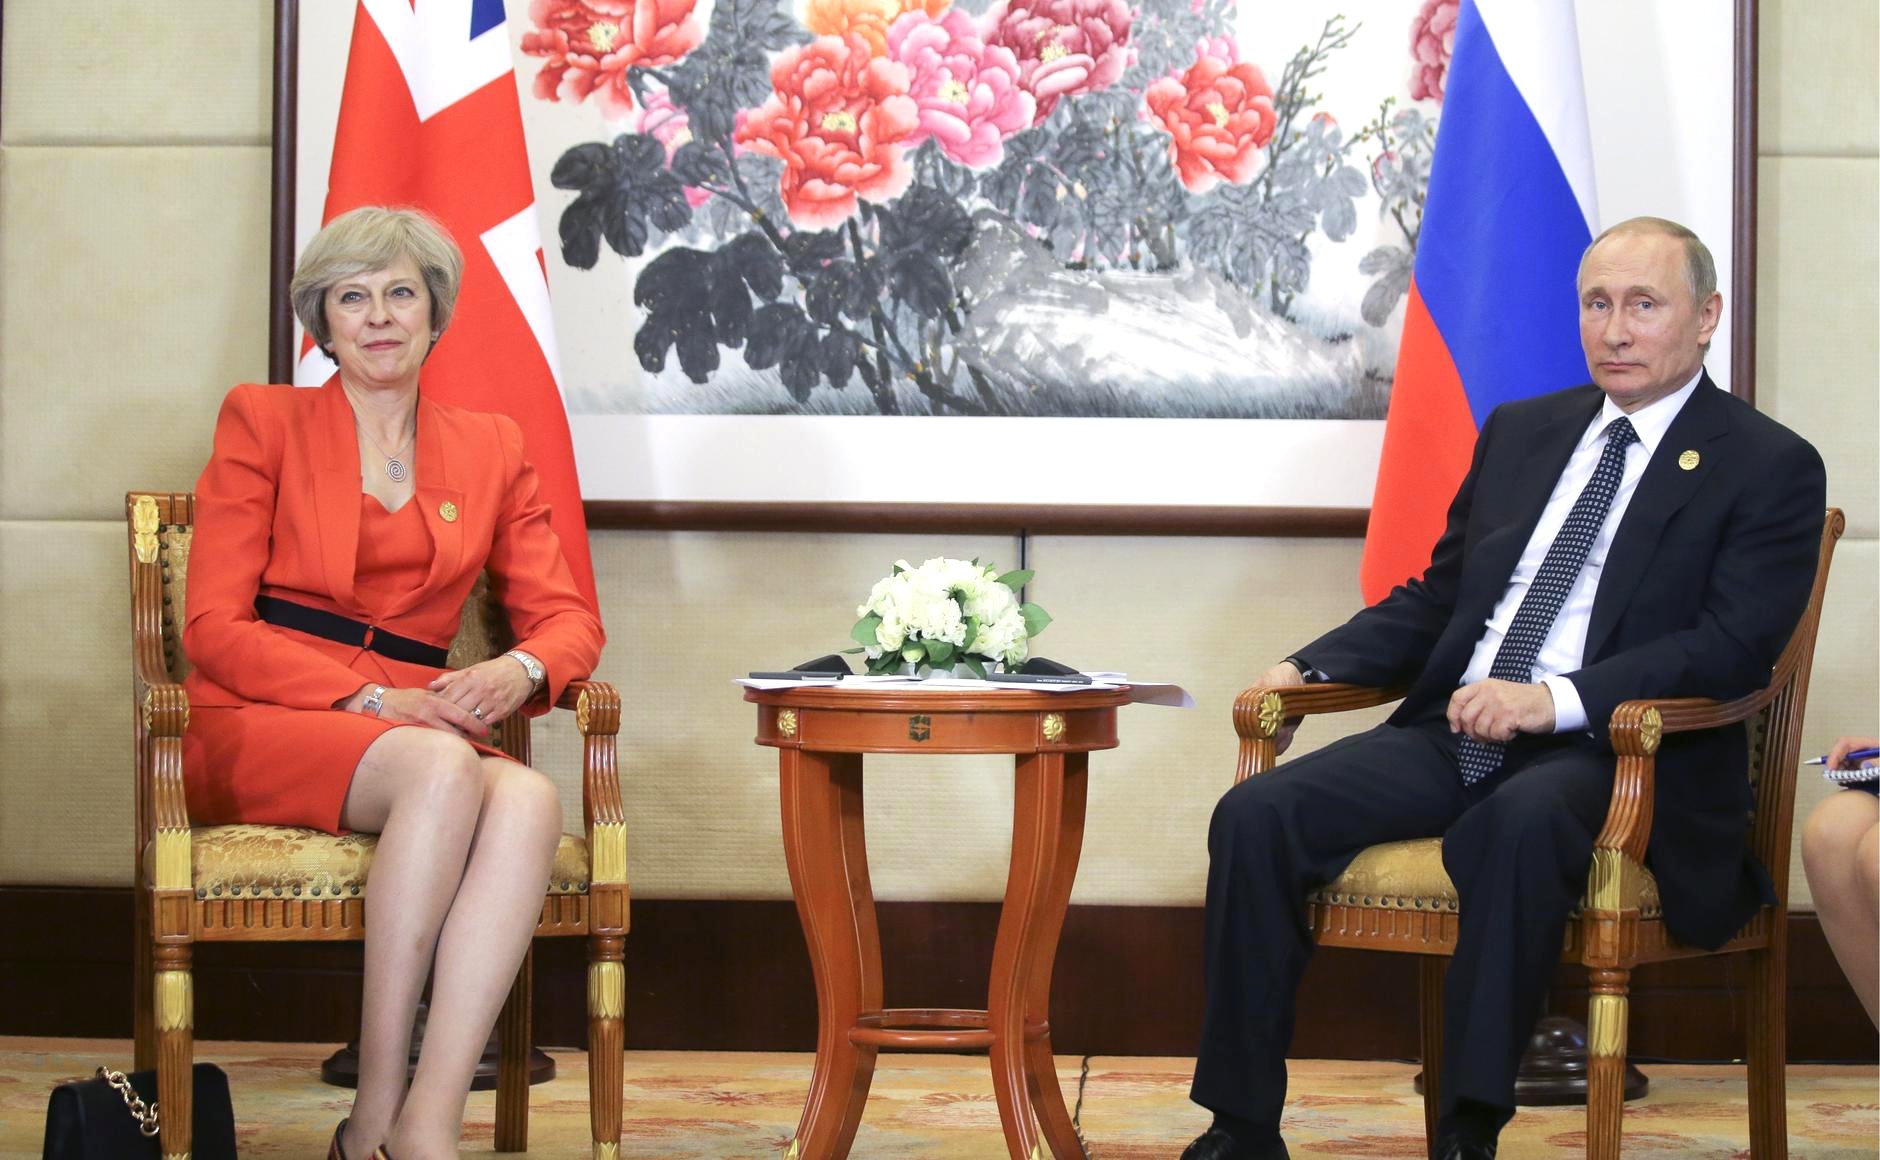 Premier Wielkiej Brytanii Theresa May i prezydent Rosji Władimir Putin. Fot. Kremlin.ru